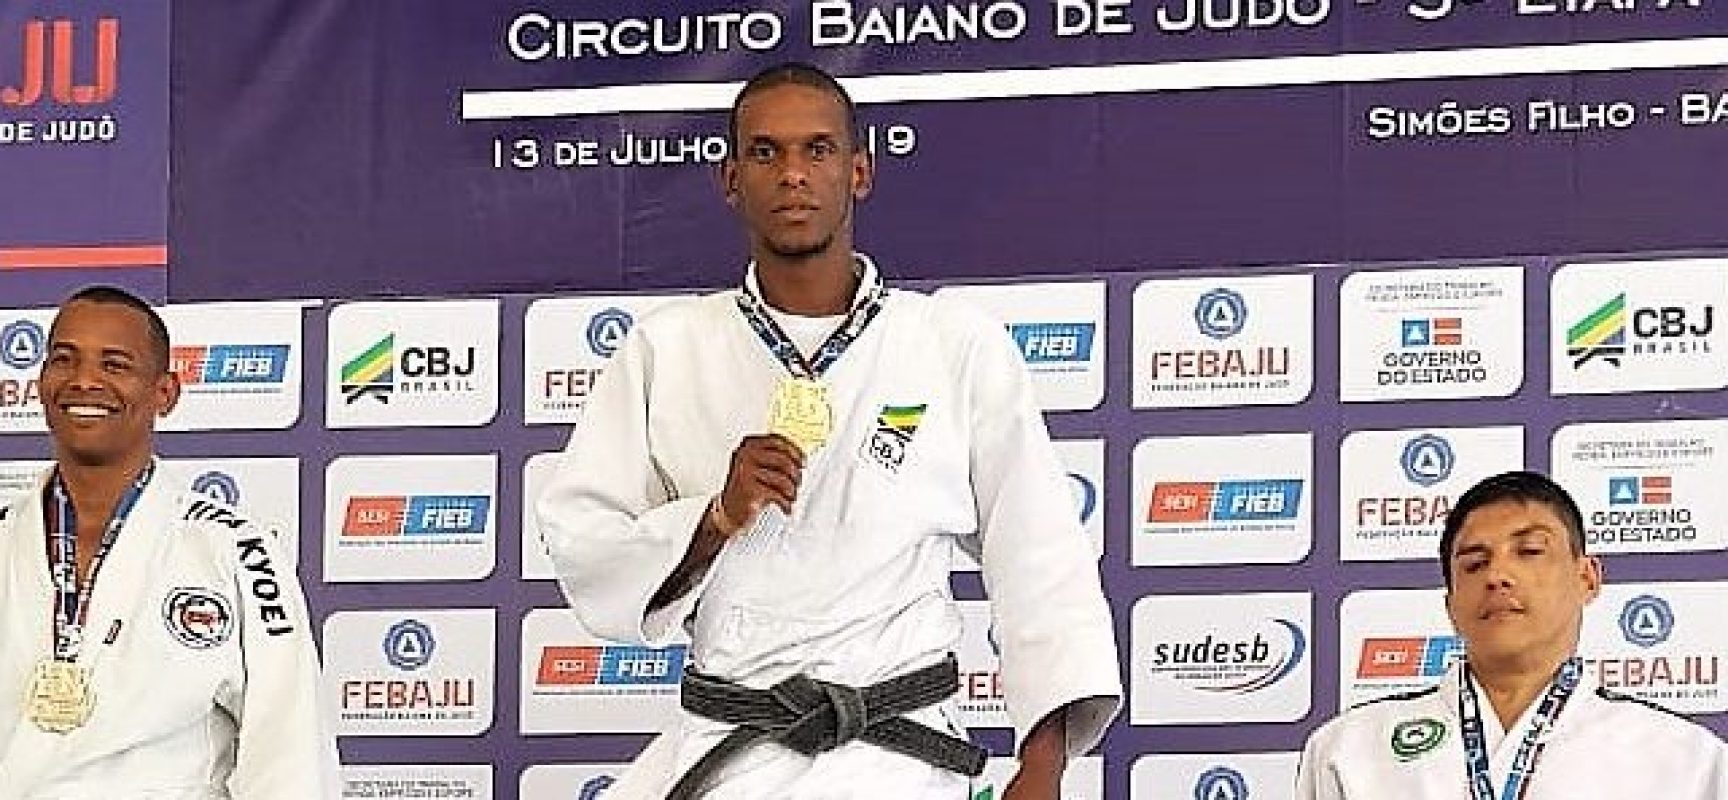 Judoca ilheense Hakson Andrade conquista etapa decisiva do circuito baiano